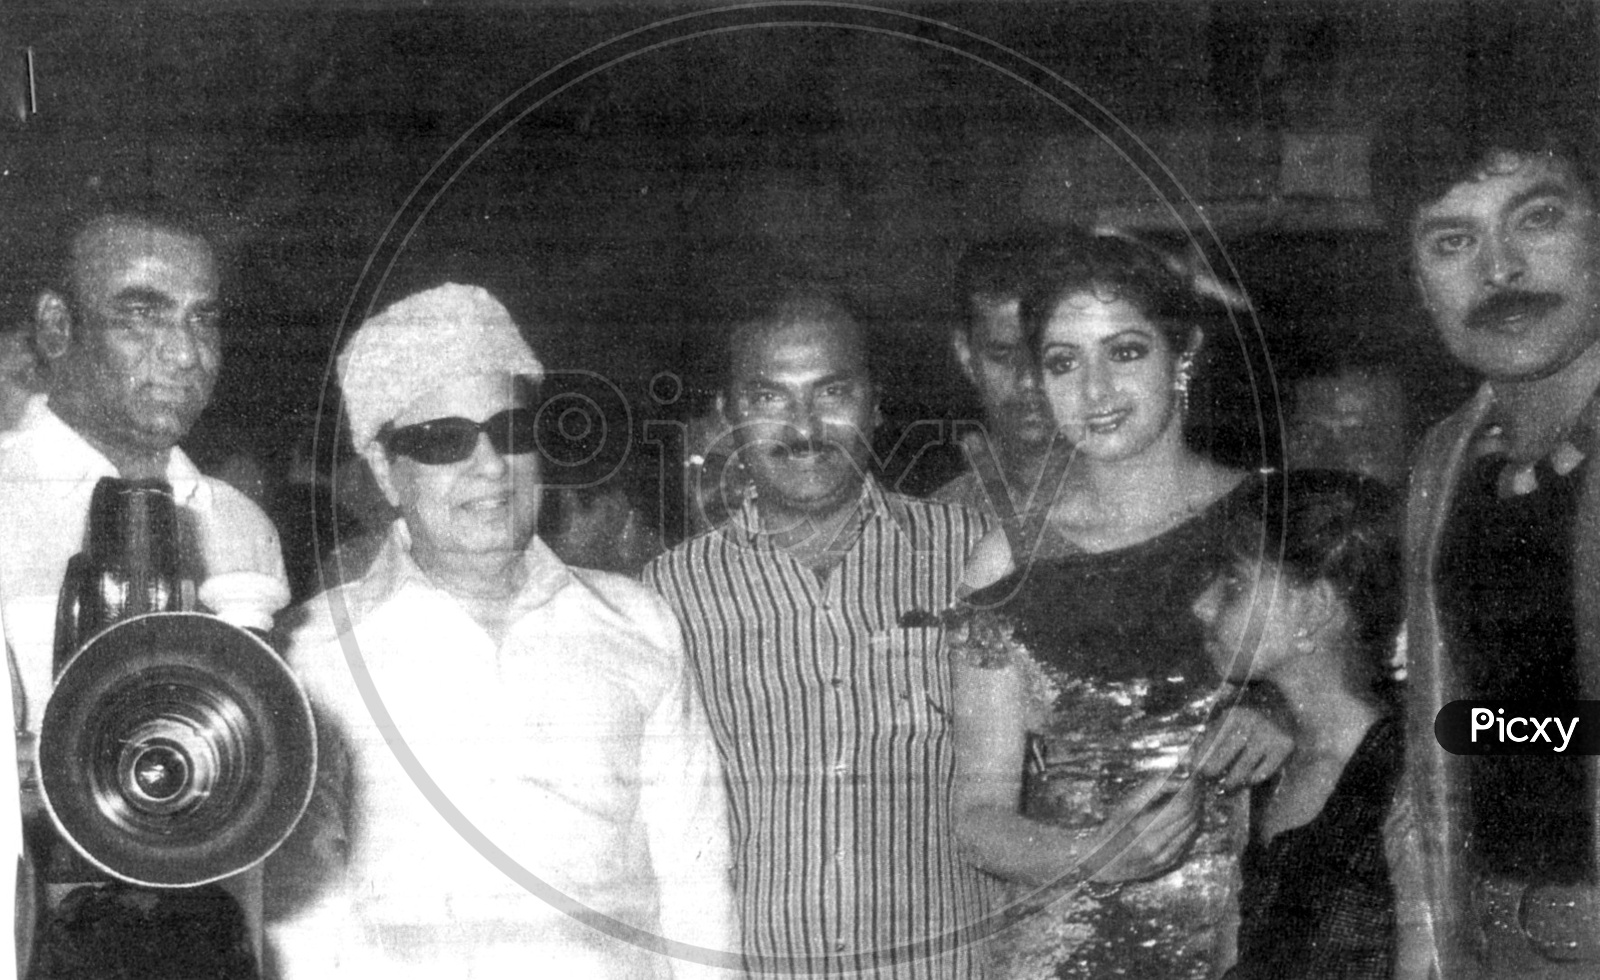 M. G. Ramachandran (Former Chief Minister of Tamil Nadu) with Chiranjeevi and Sridevi